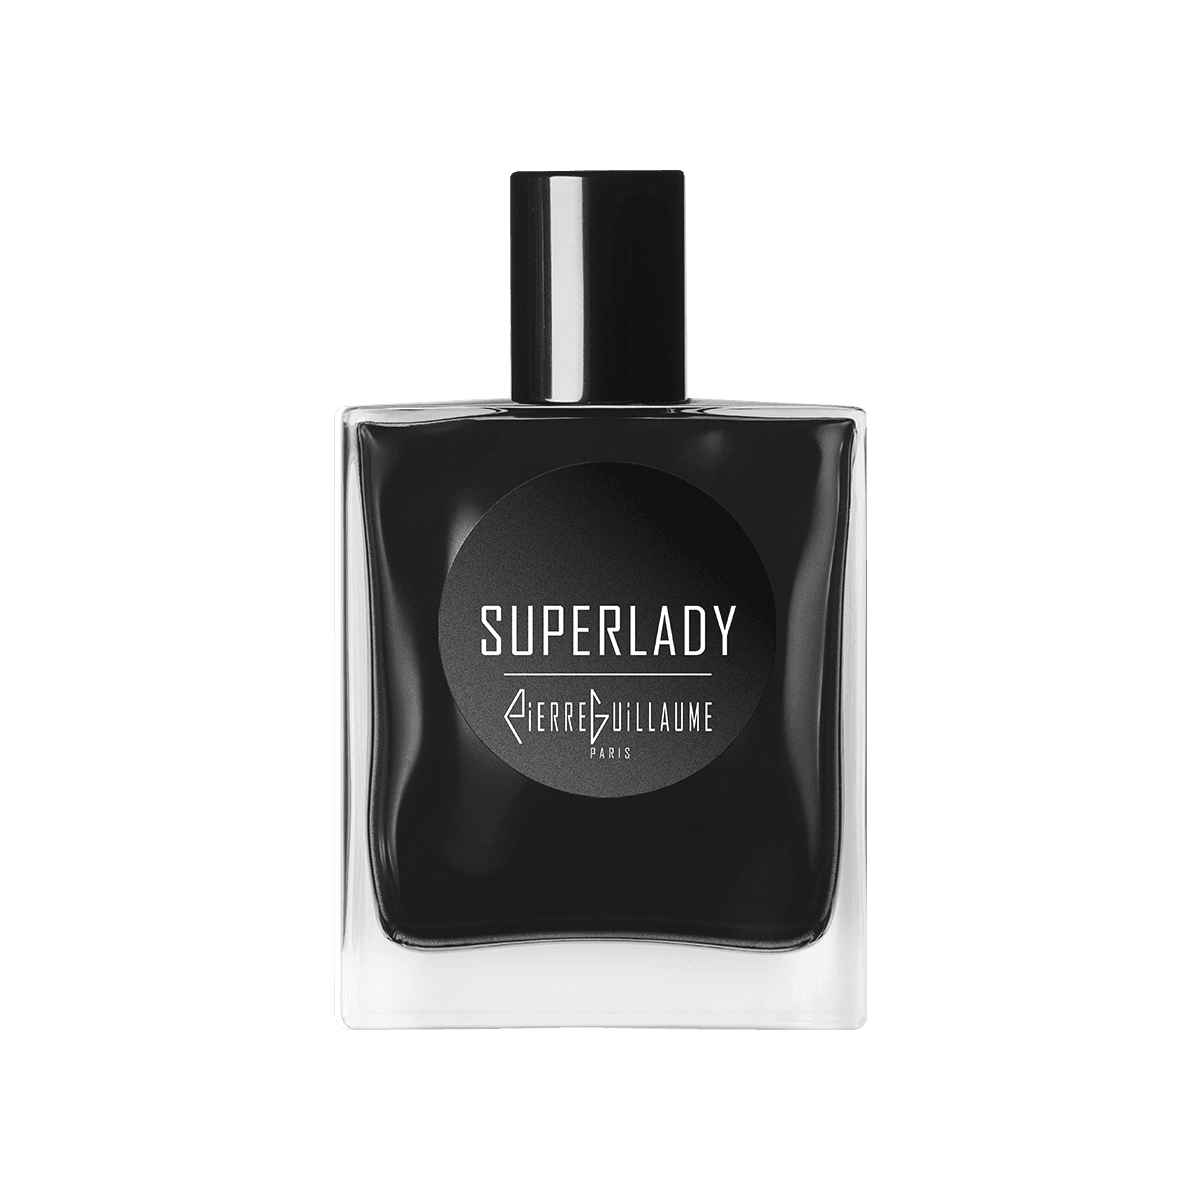 Pierre Guillaume Noire - Superlady 50 ml | Perfume Lounge